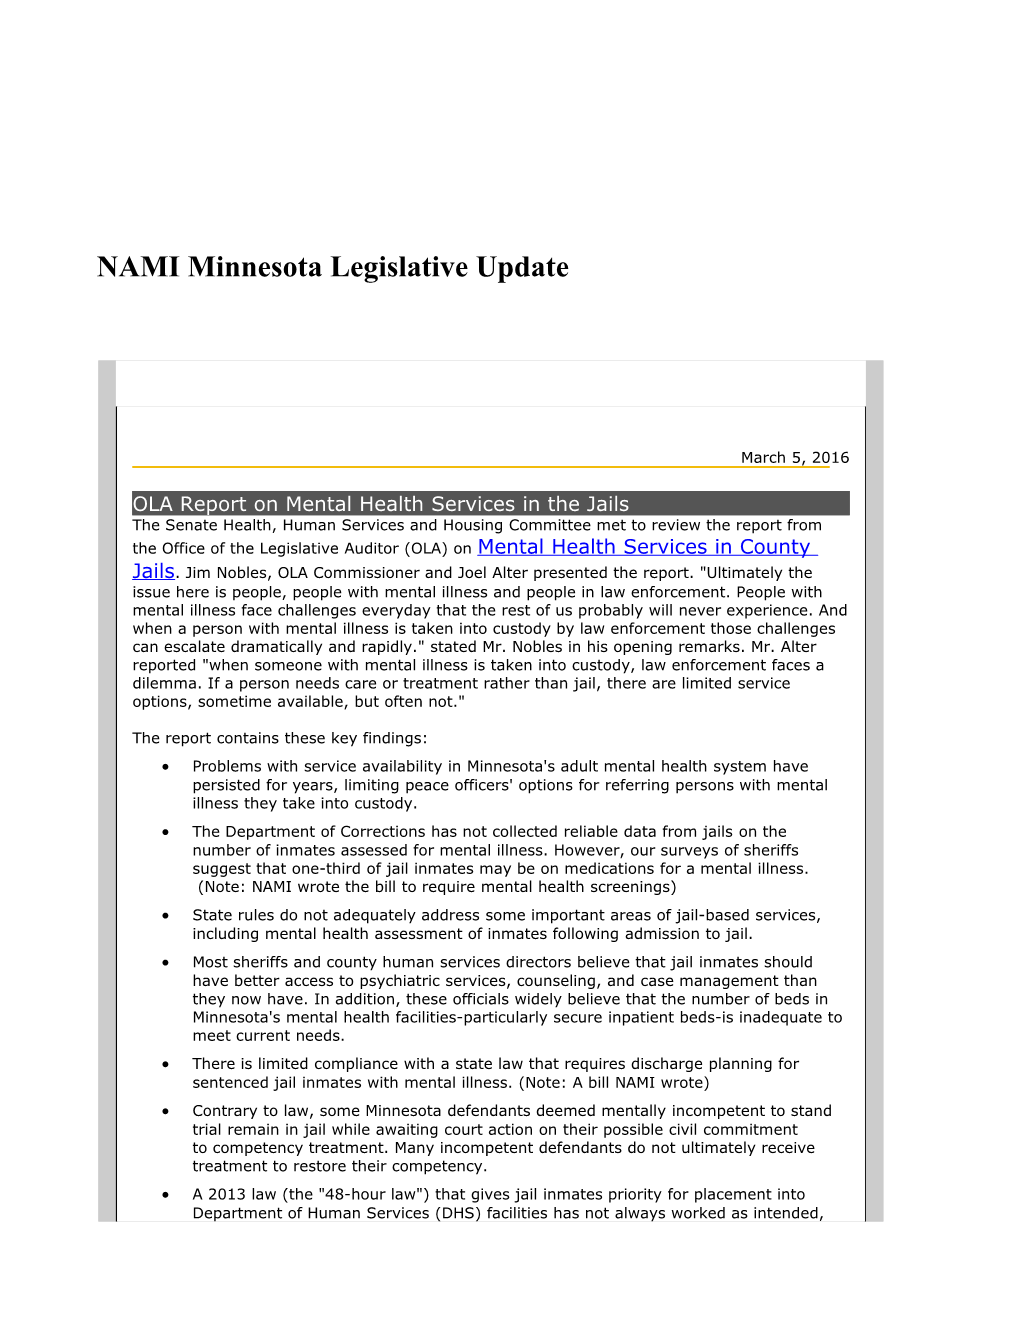 NAMI Minnesota Legislative Update s1